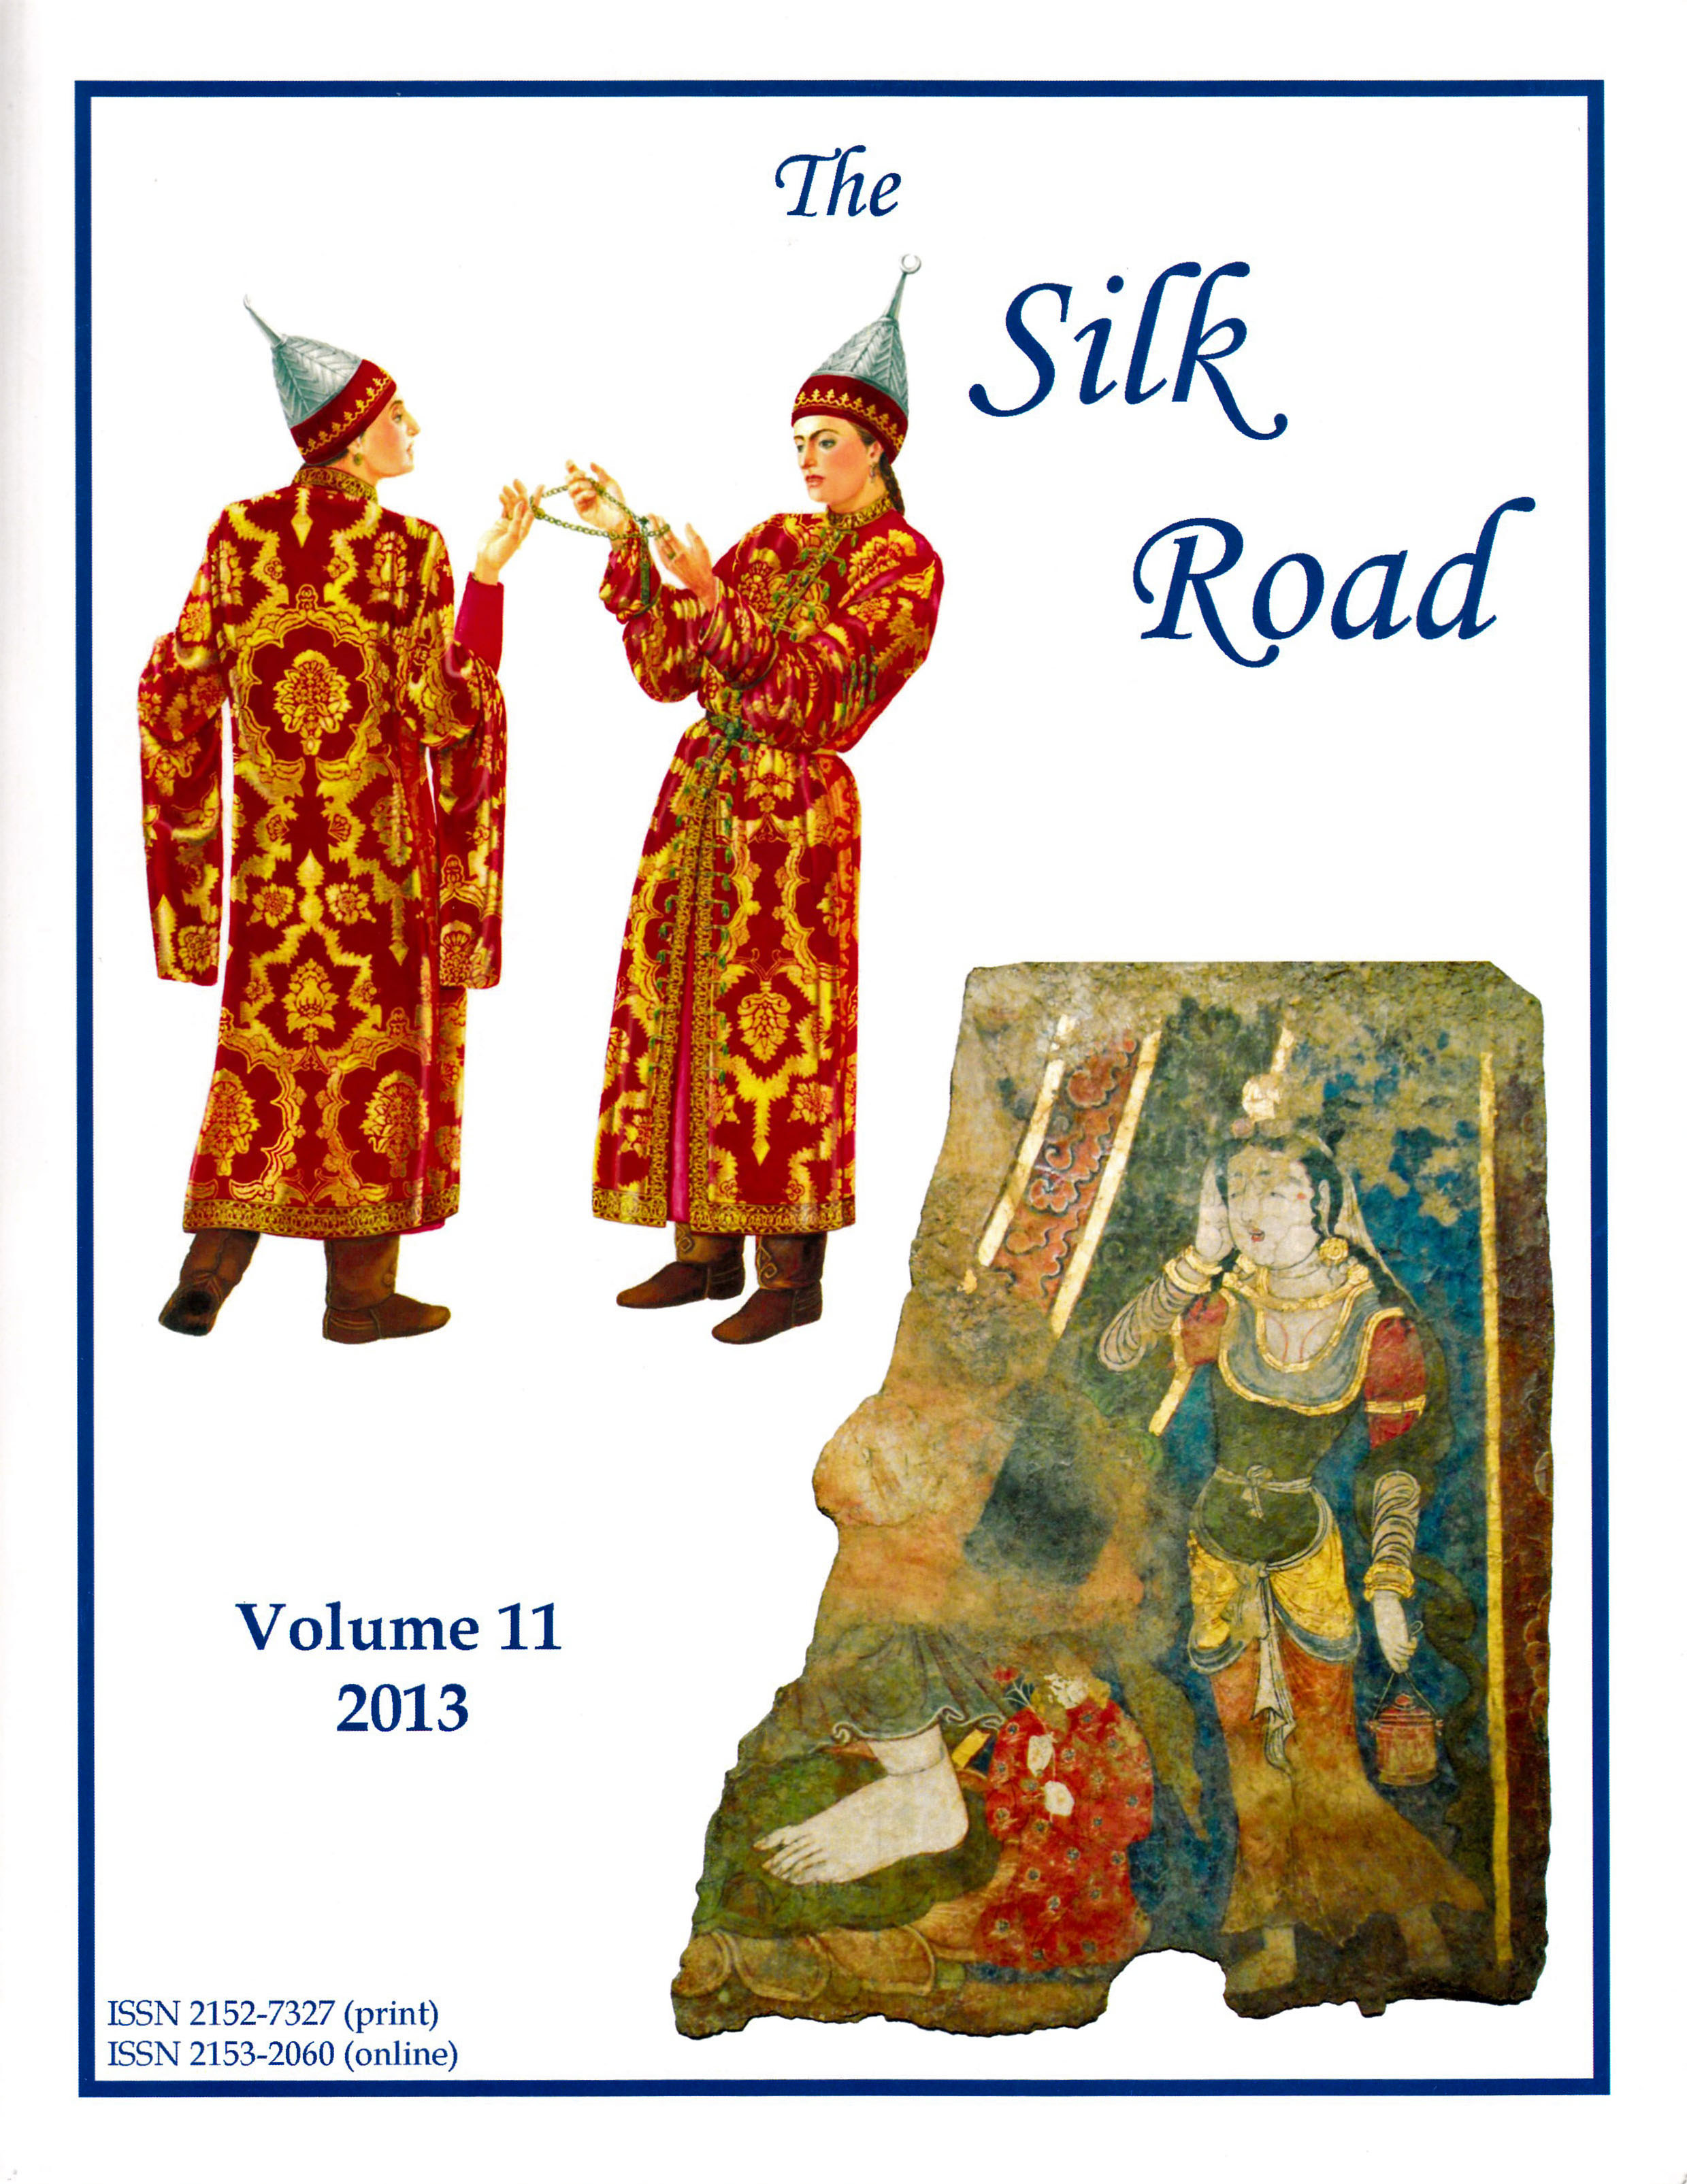 The Silk Road, Volume 11, 2013